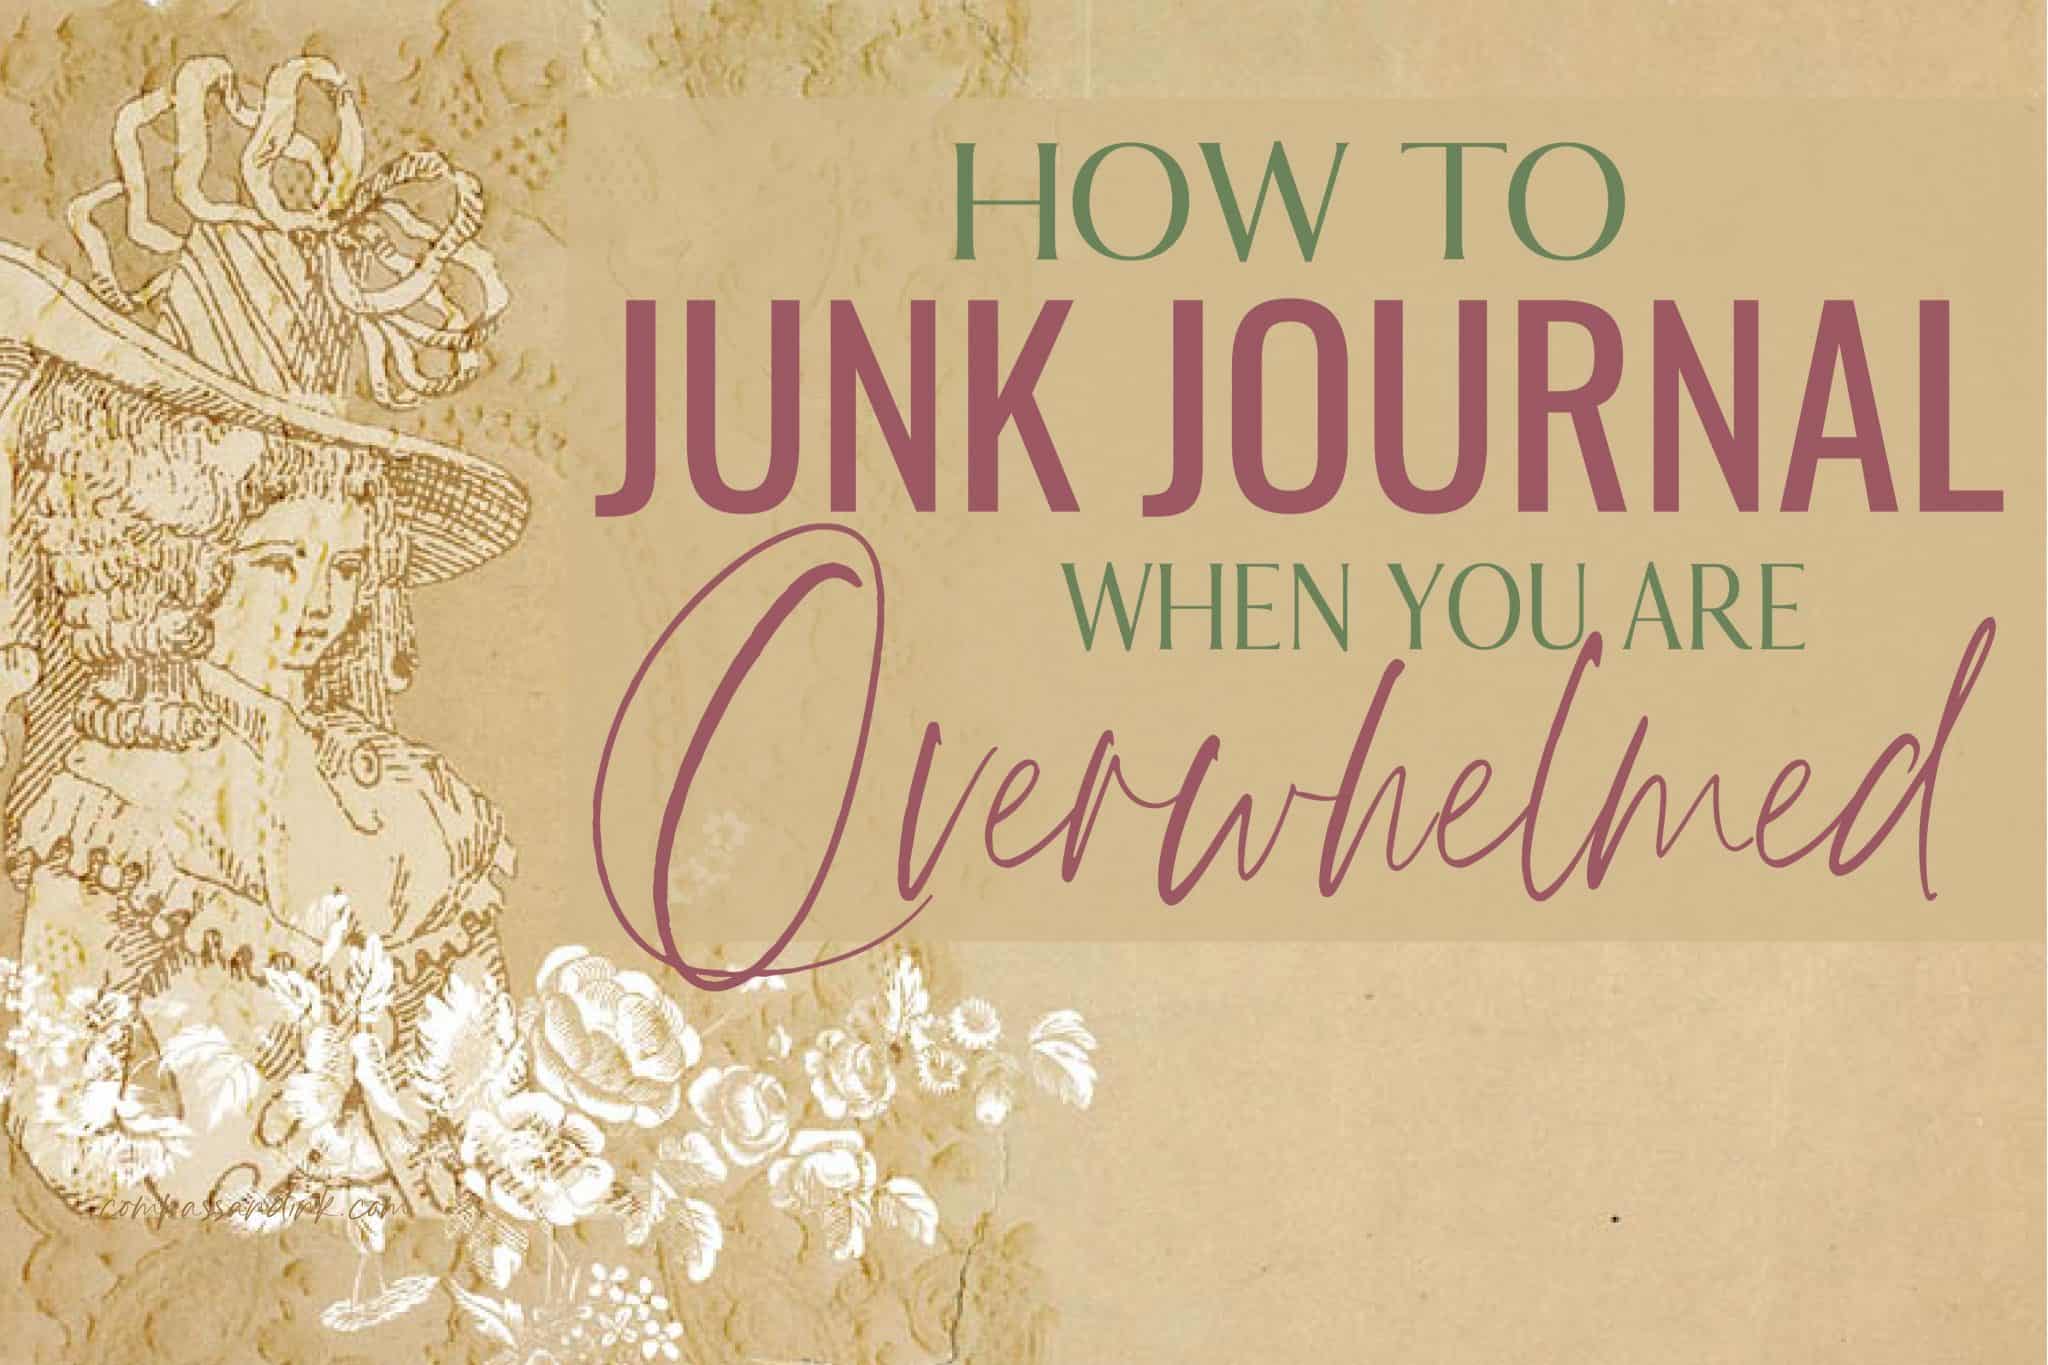 Junk Journal Supplies List & Where To Find Them